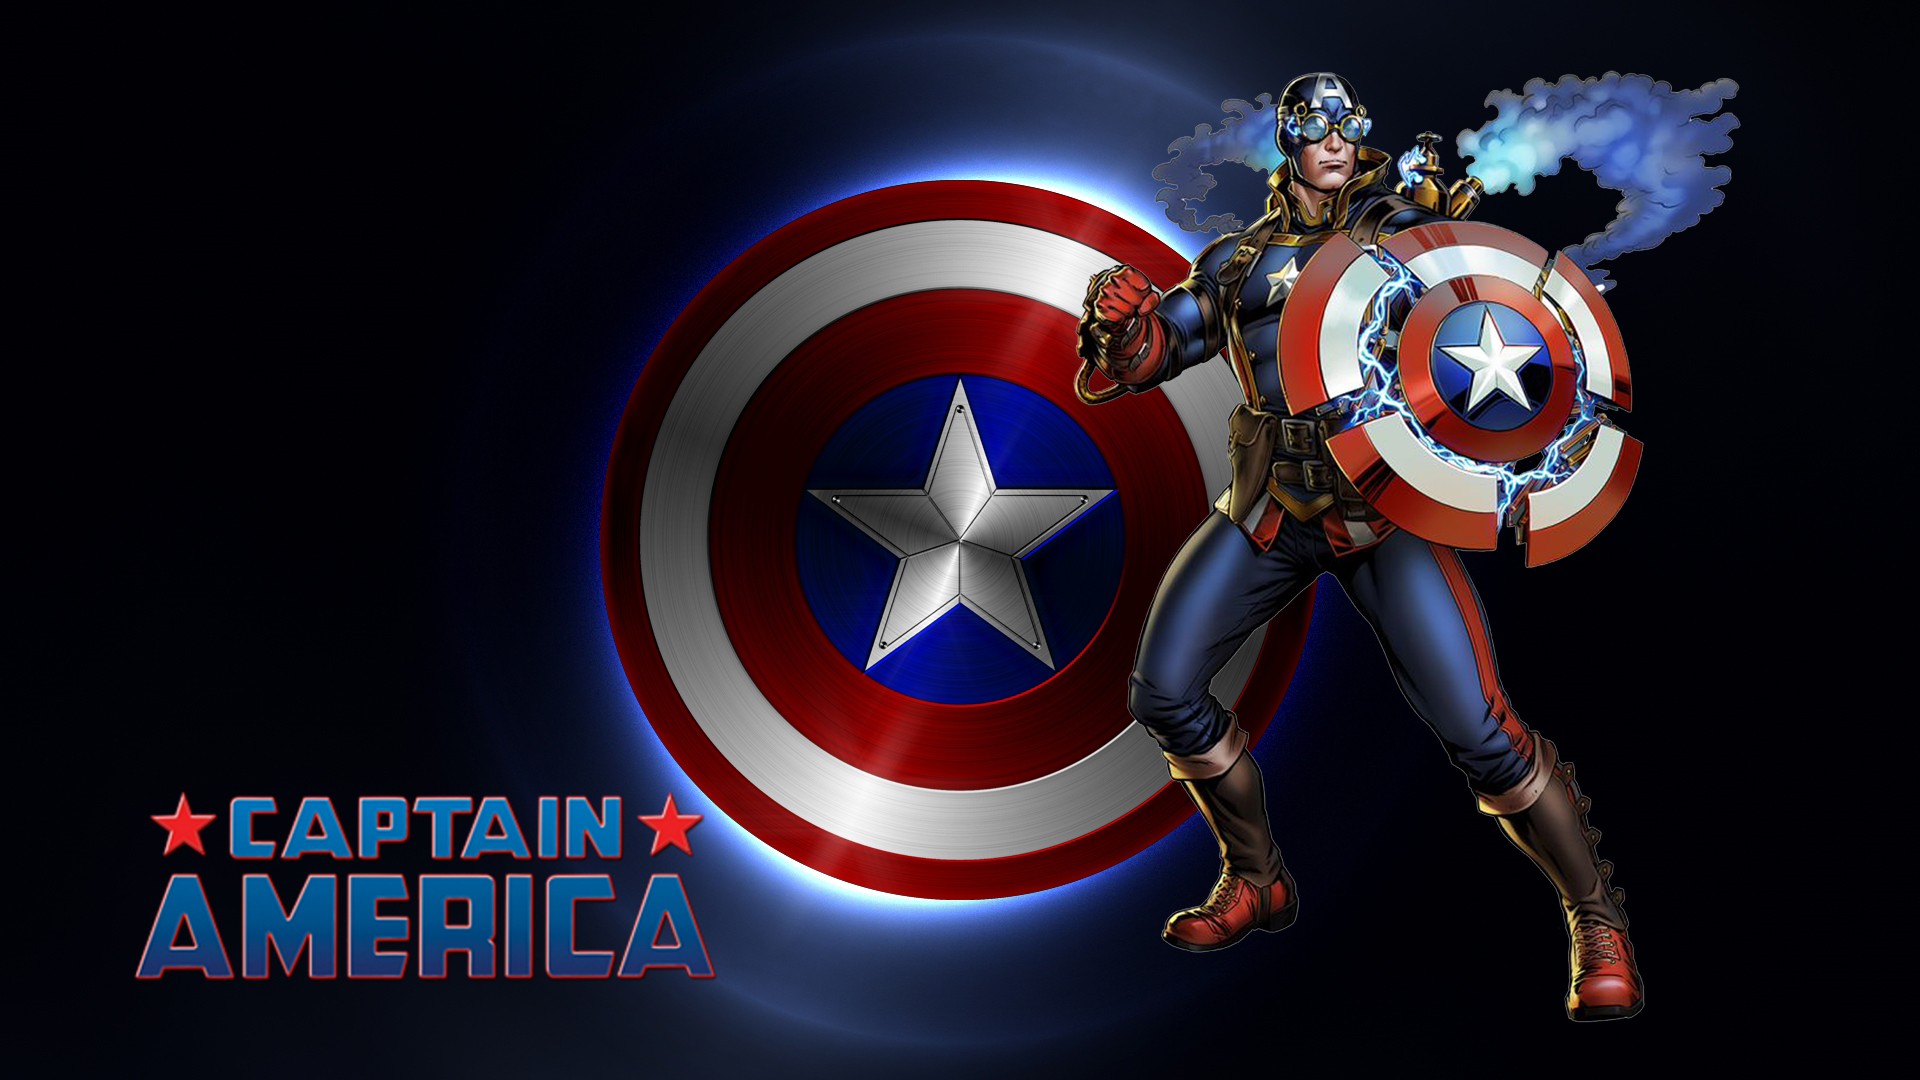 Marvel Captain America Avengers Alliance 2 Desktop Backgrounds Free  Download 1920x1080 : 